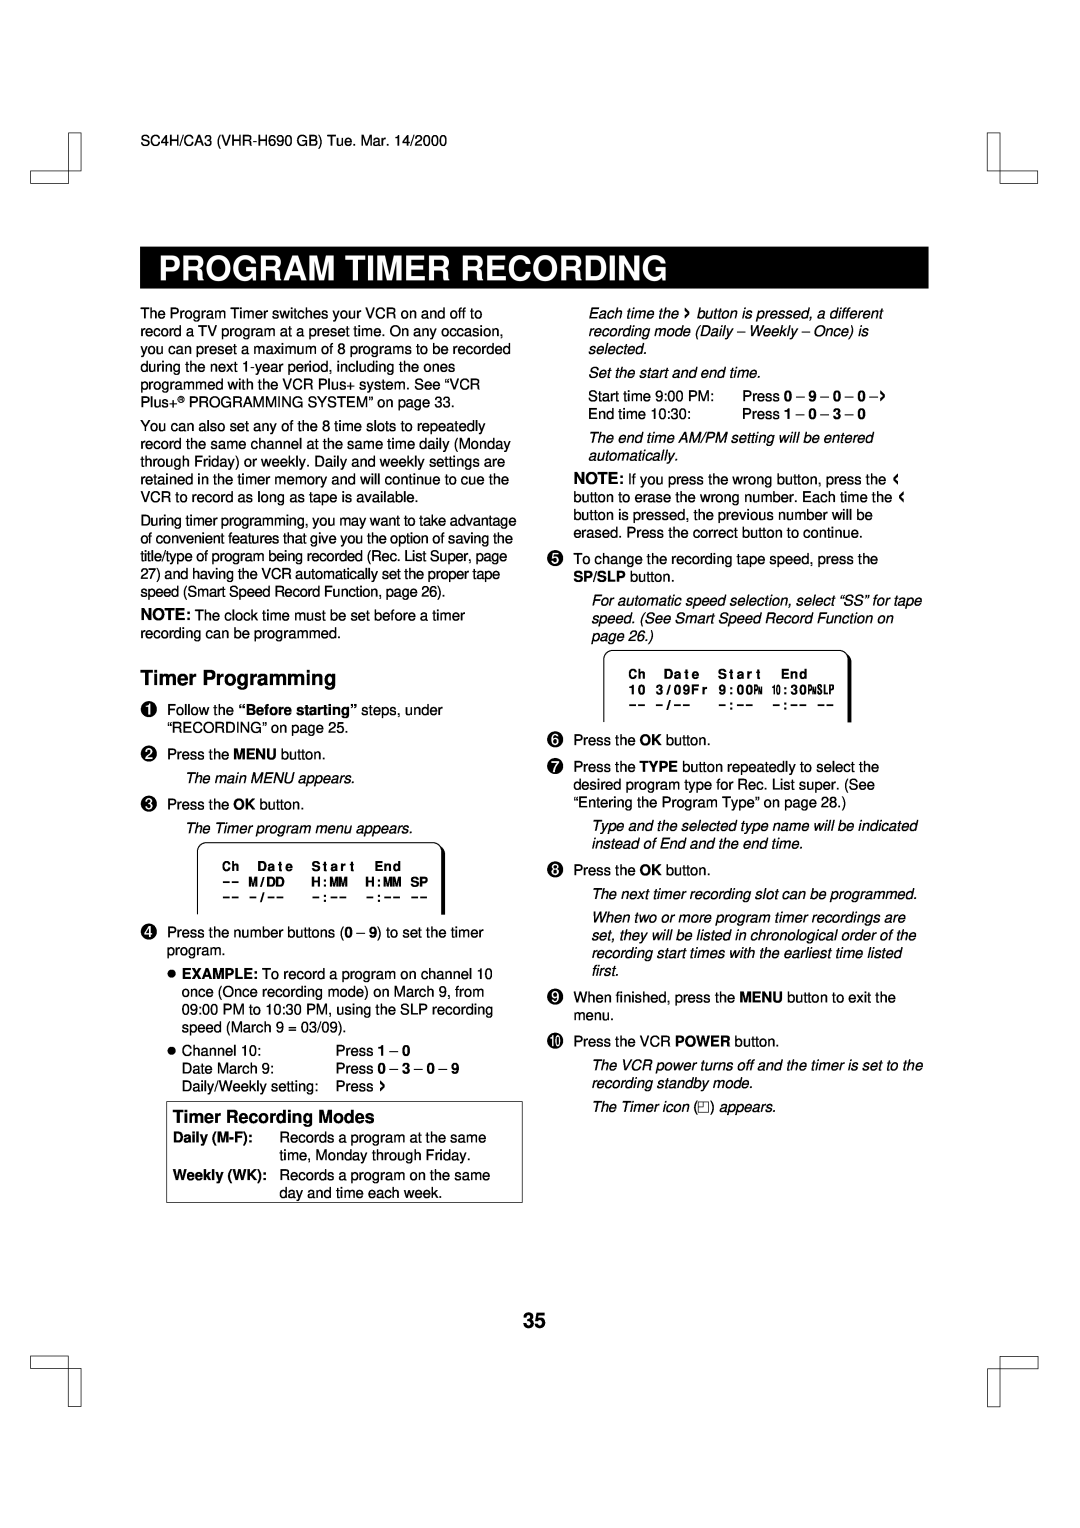 Sanyo VHR-H690 Program Timer Recording, Timer Programming, Timer Recording Modes, The Timer program menu appears 